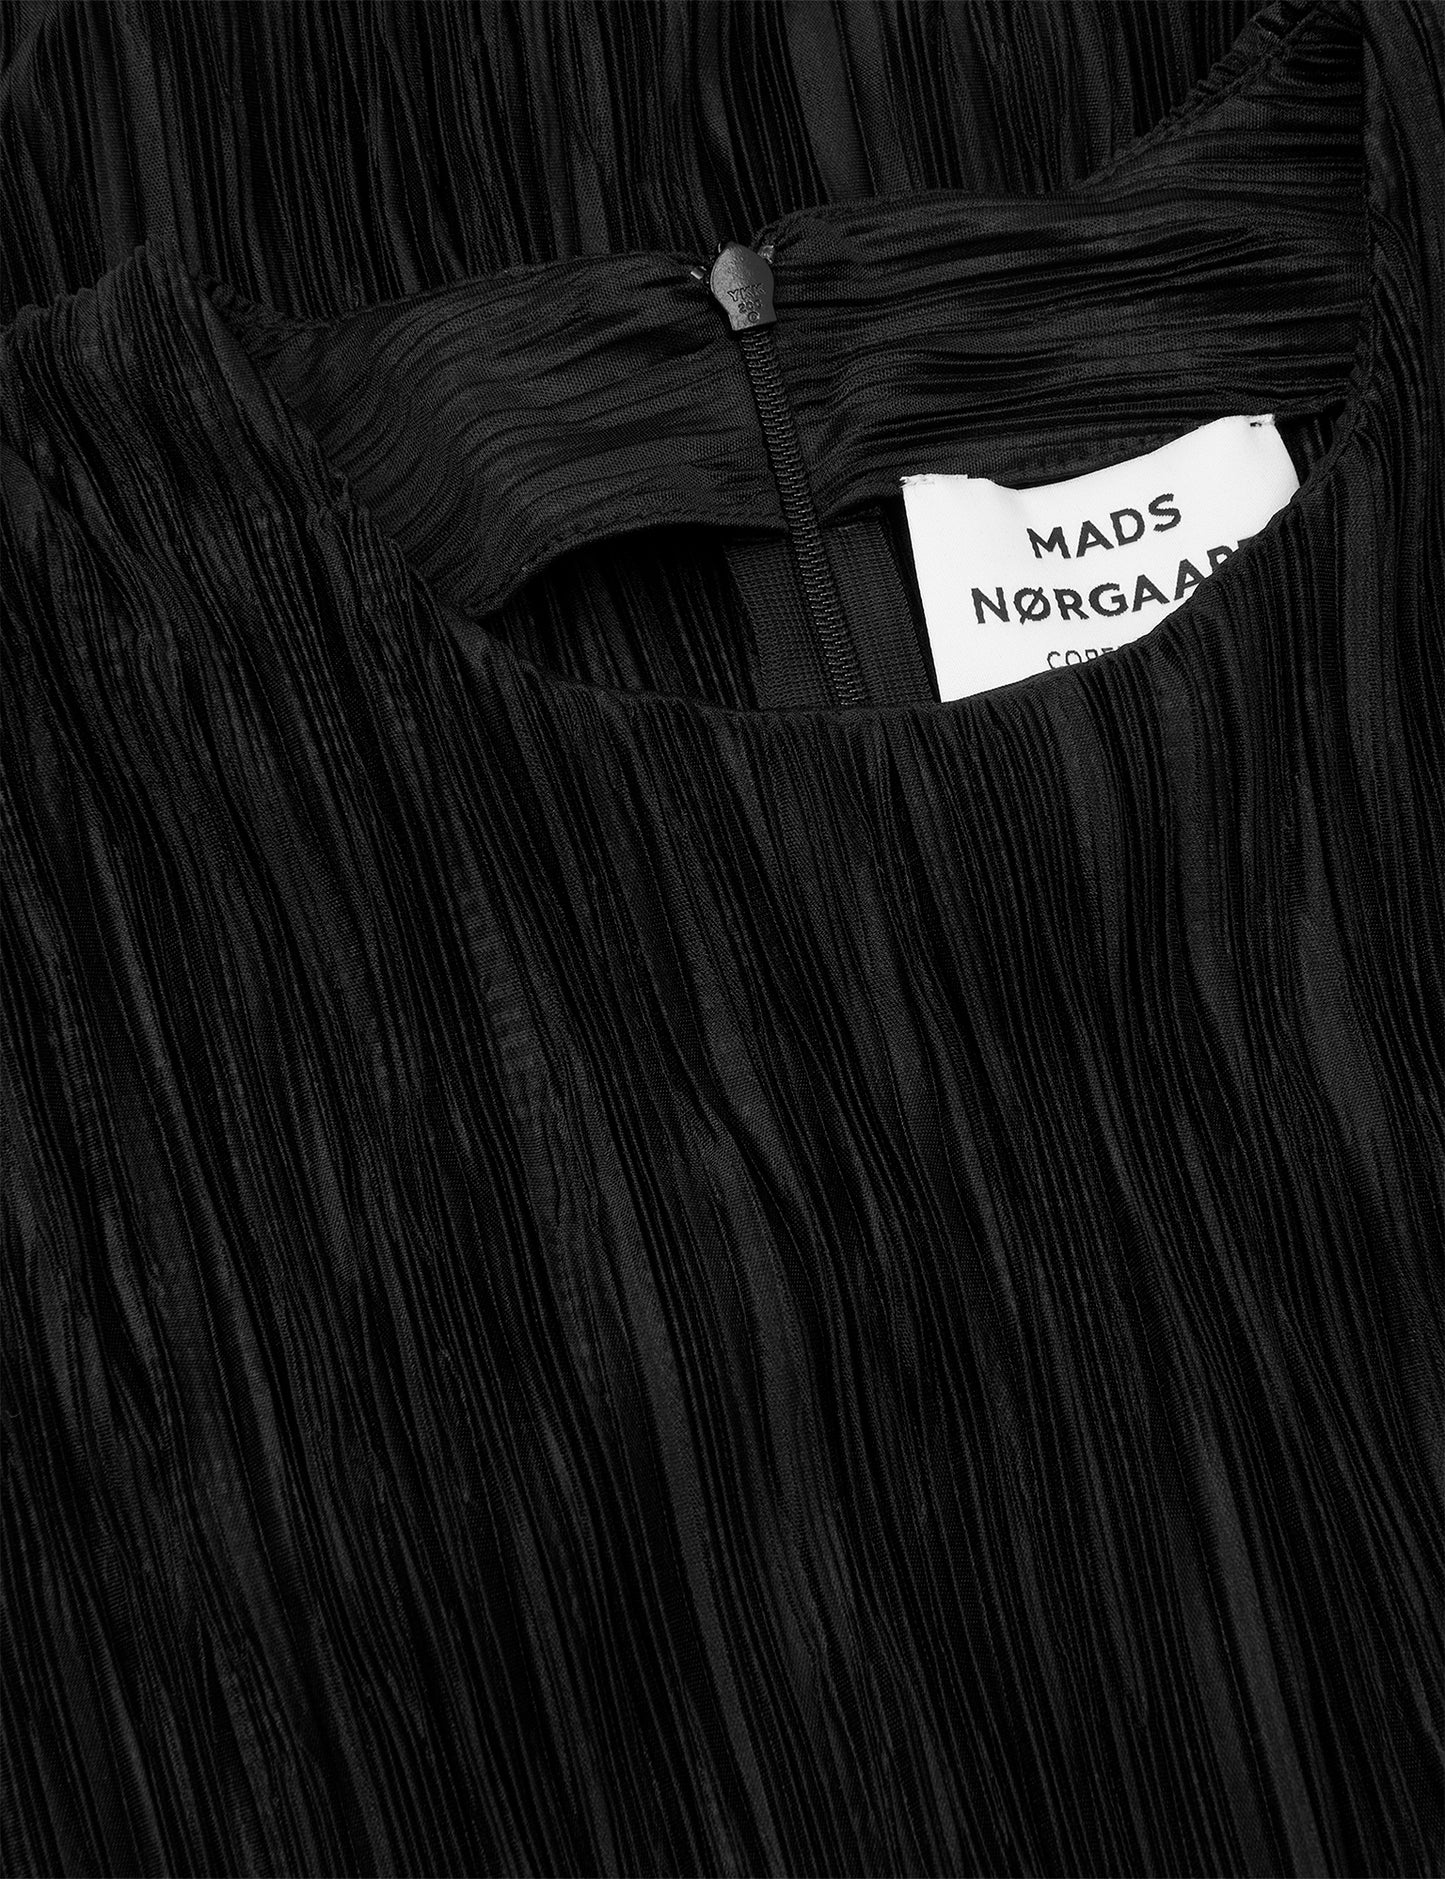 Dantel Beate Dress, Black